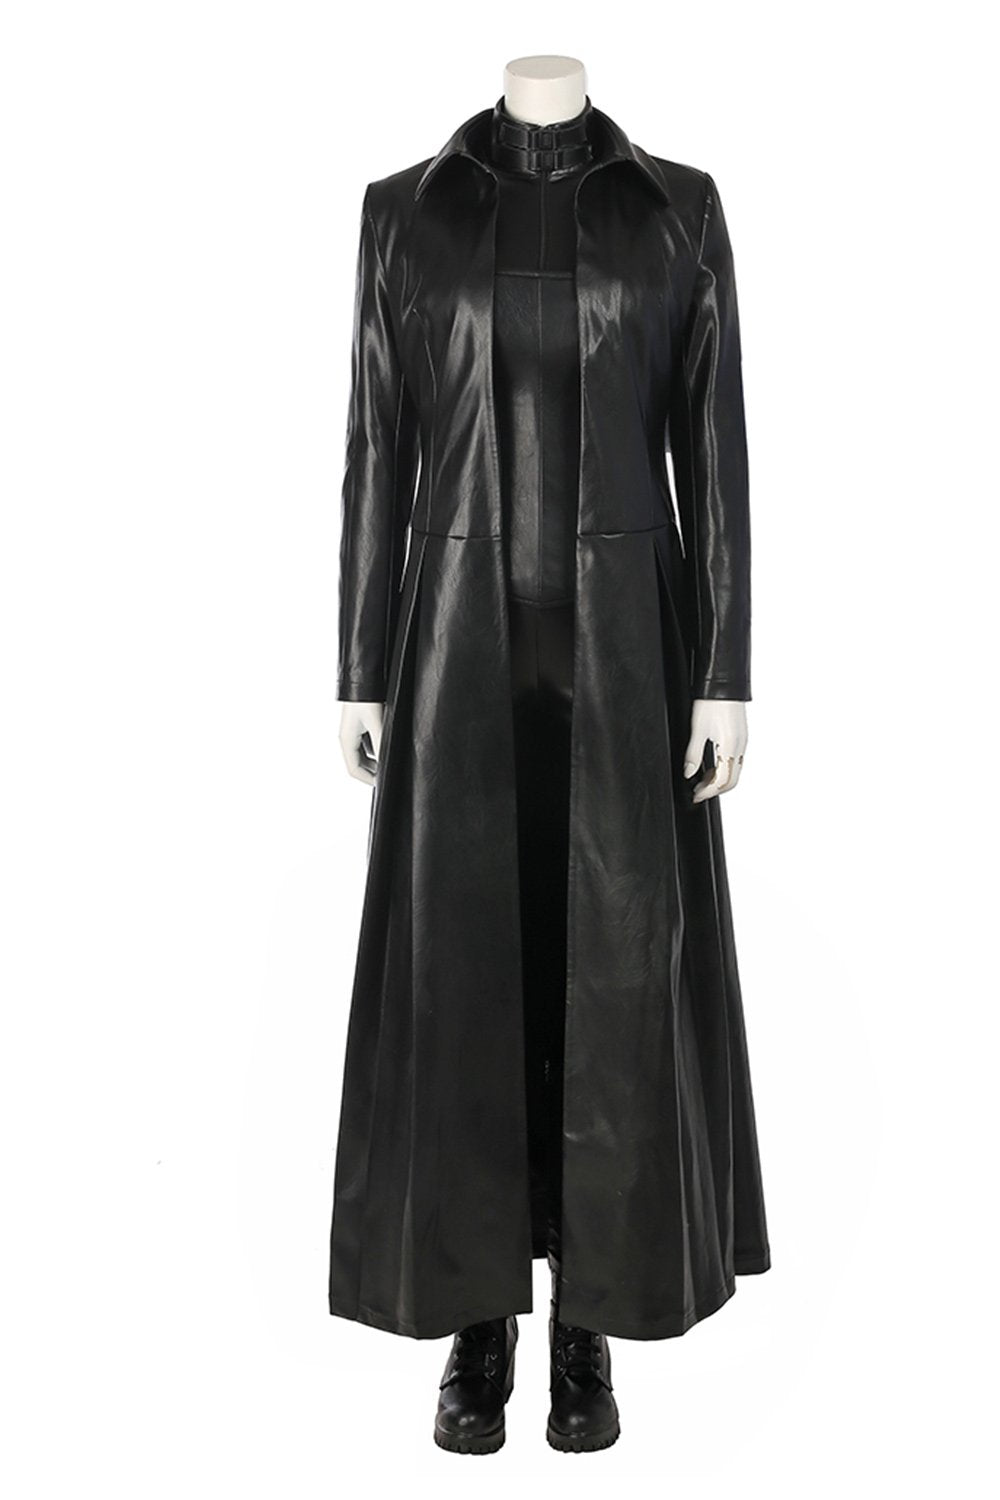 Underworld: Blood Wars Vampire Death Dealer Selene Outfit Cosplay Costume